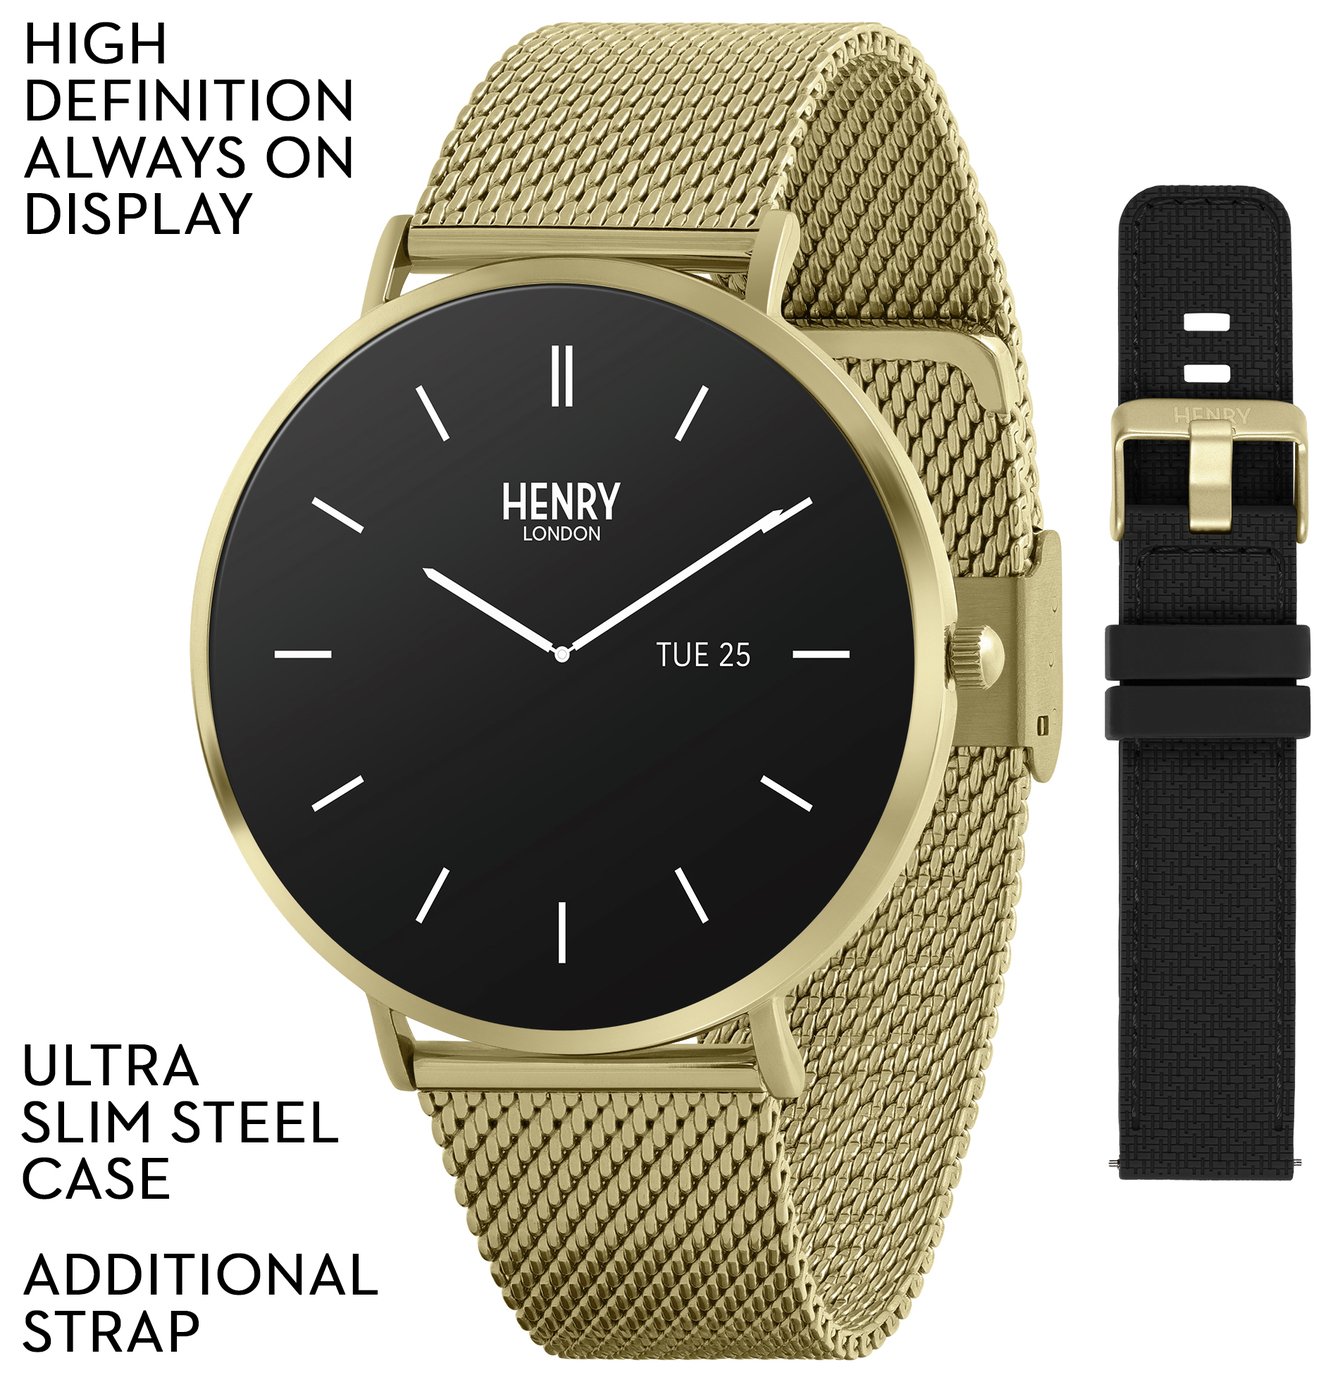 Henry London HD Ultra Slim Gold and Black Smart Watch Set